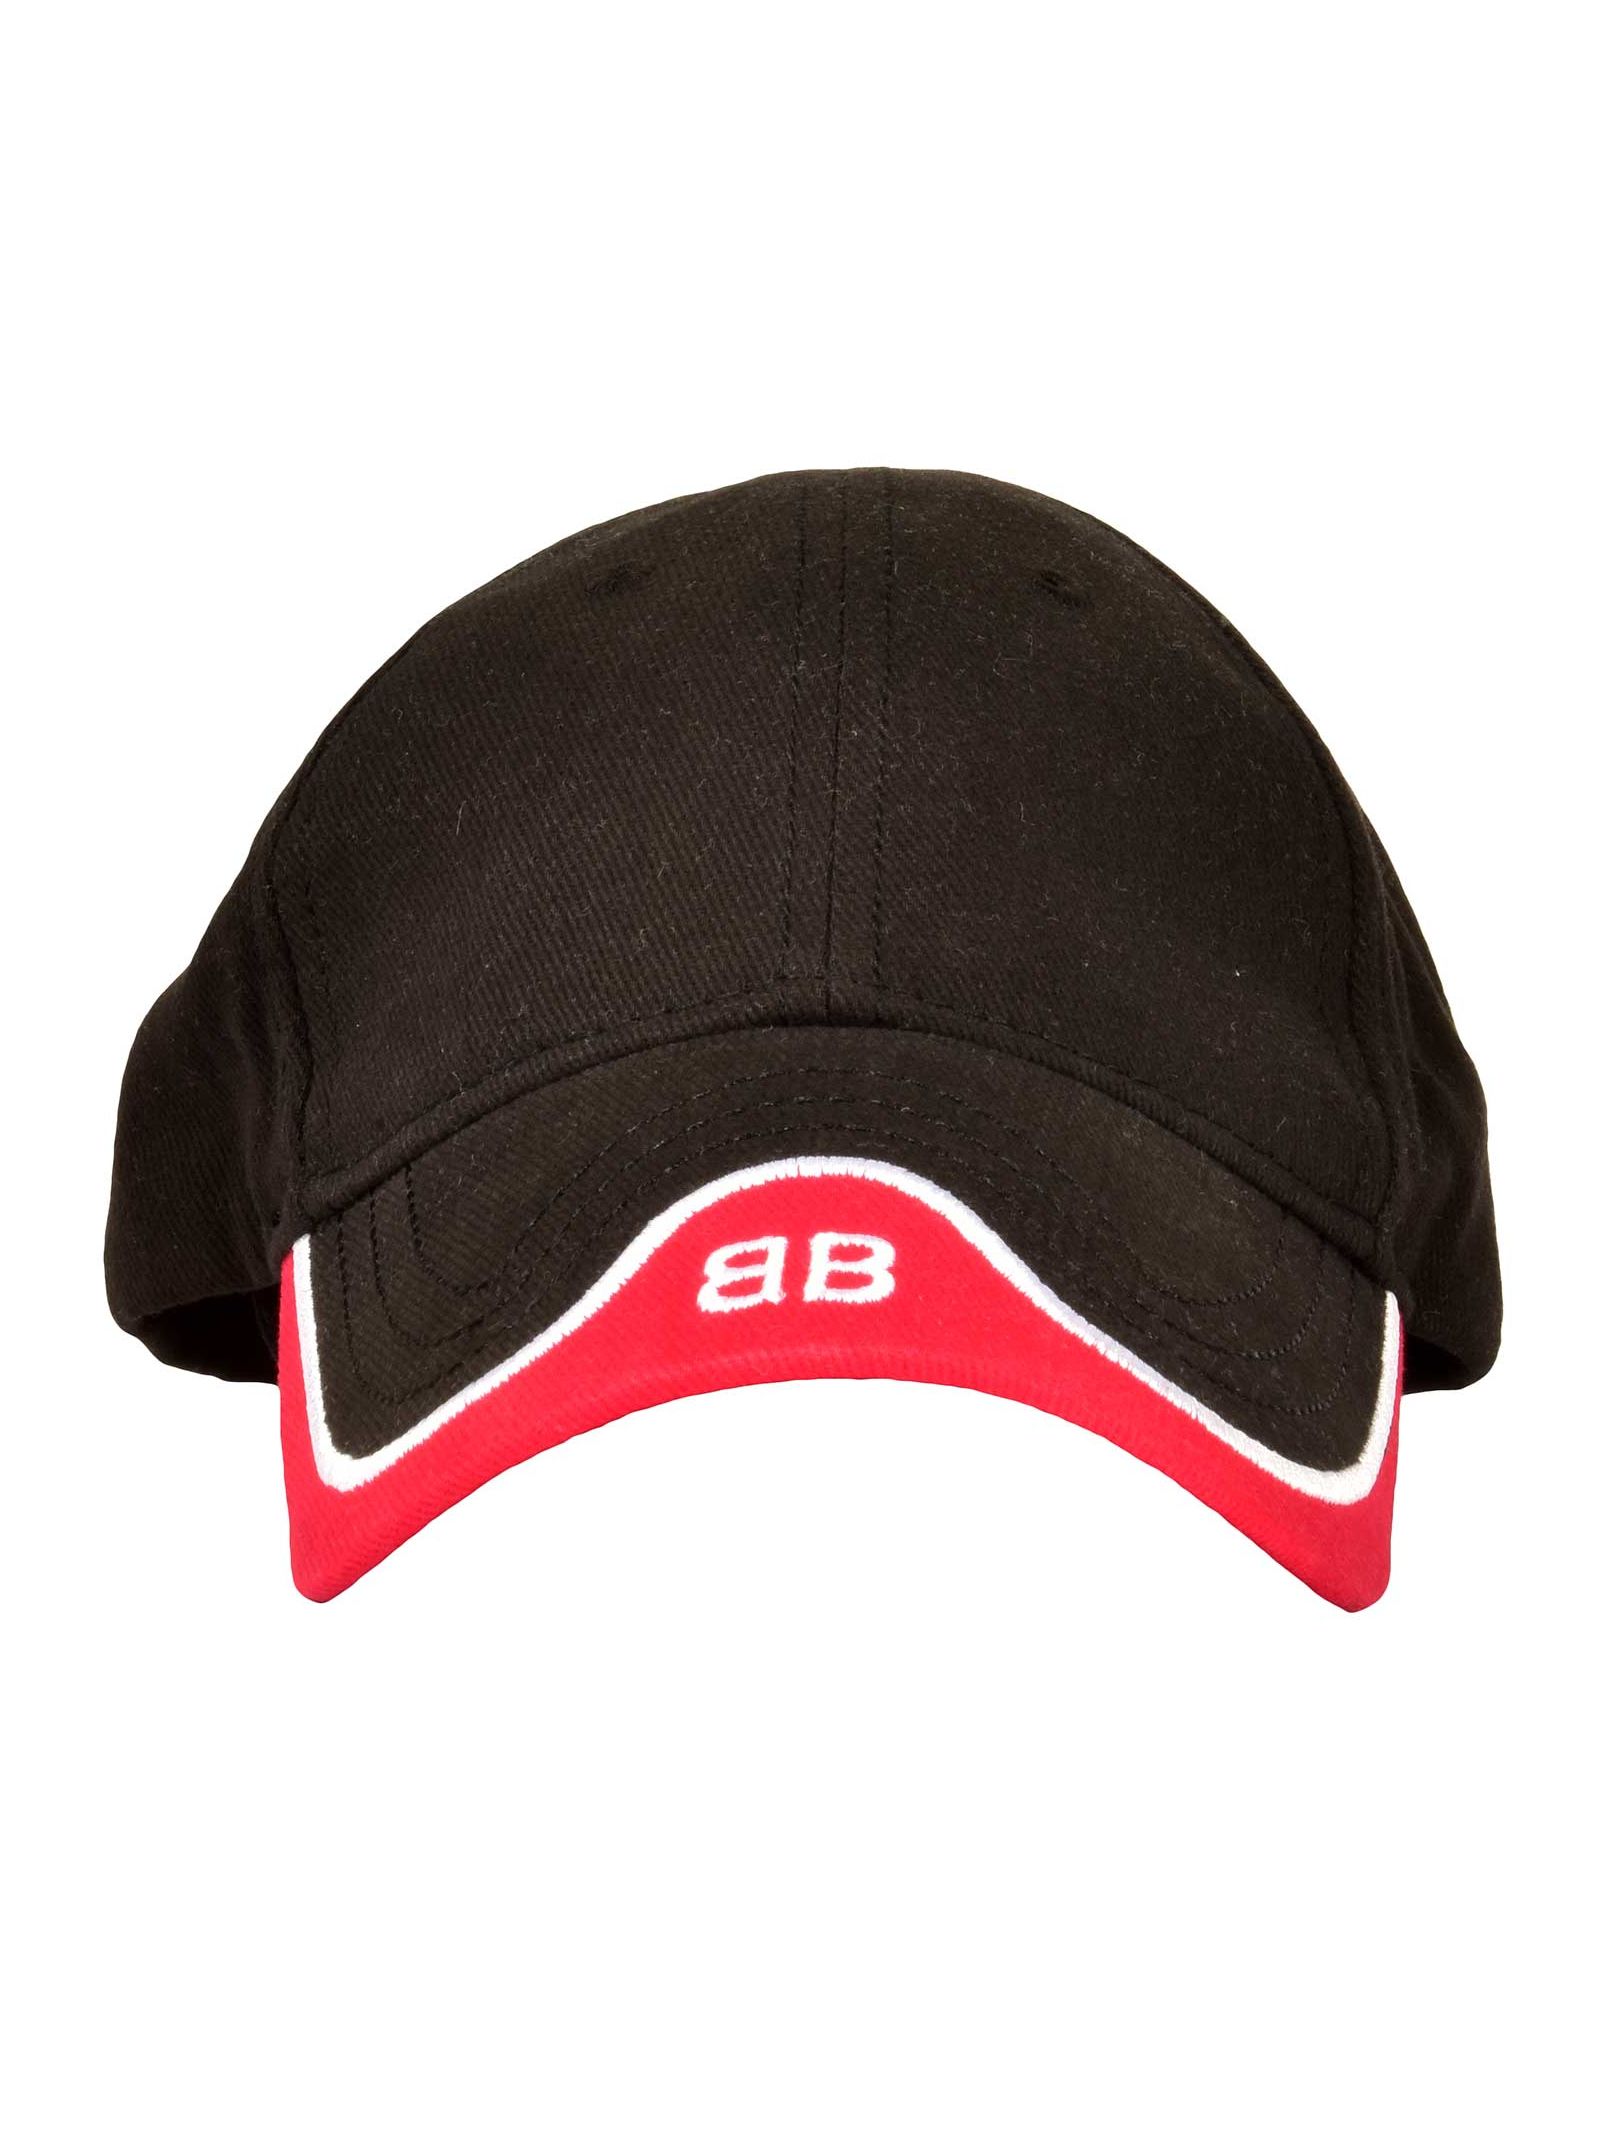 italist | Best price in the market for Balenciaga Balenciaga Bb Hat